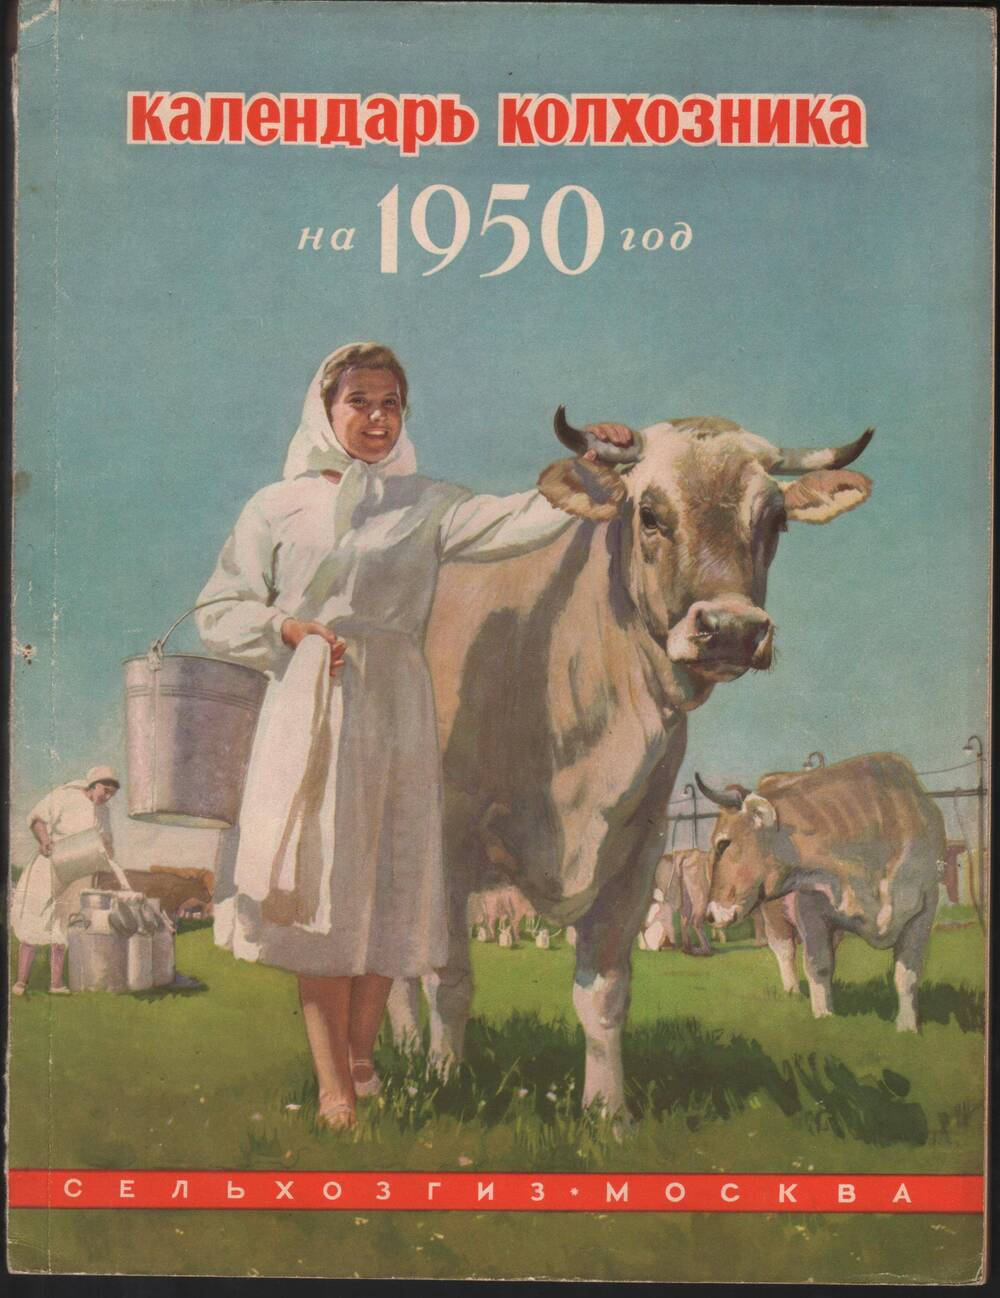 Календарь колхозника на 1950 год.